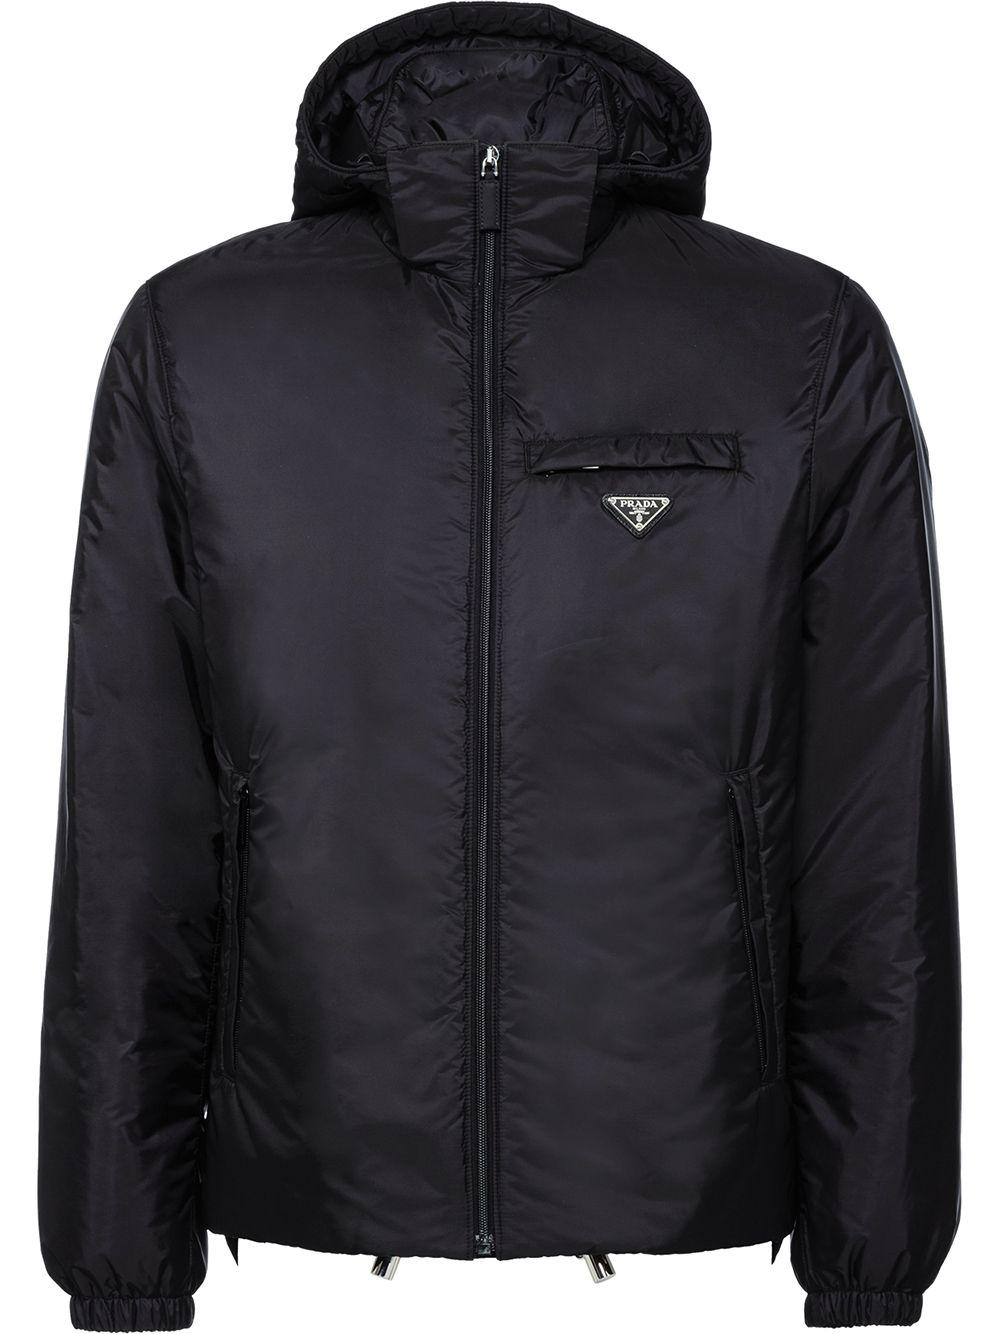 Prada Synthetic Hooded Puffer Jacket in Black for Men - Lyst